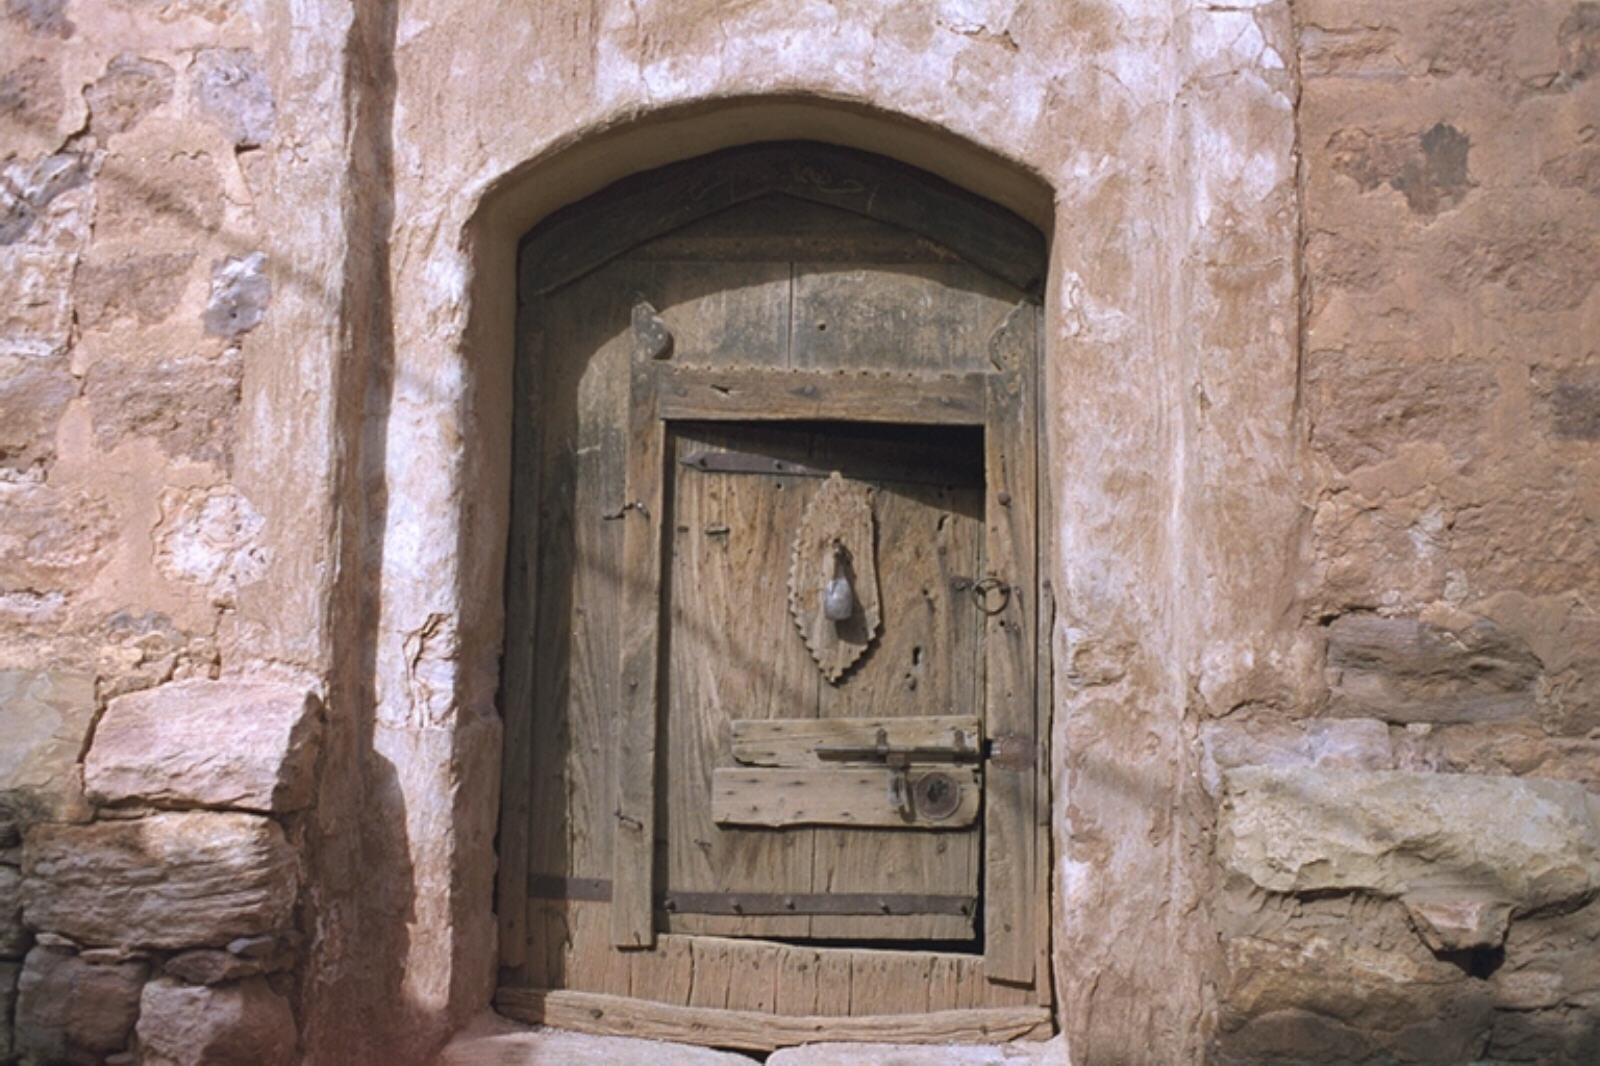 A wooden door in Kawkaban village near Sanaa, Yemen